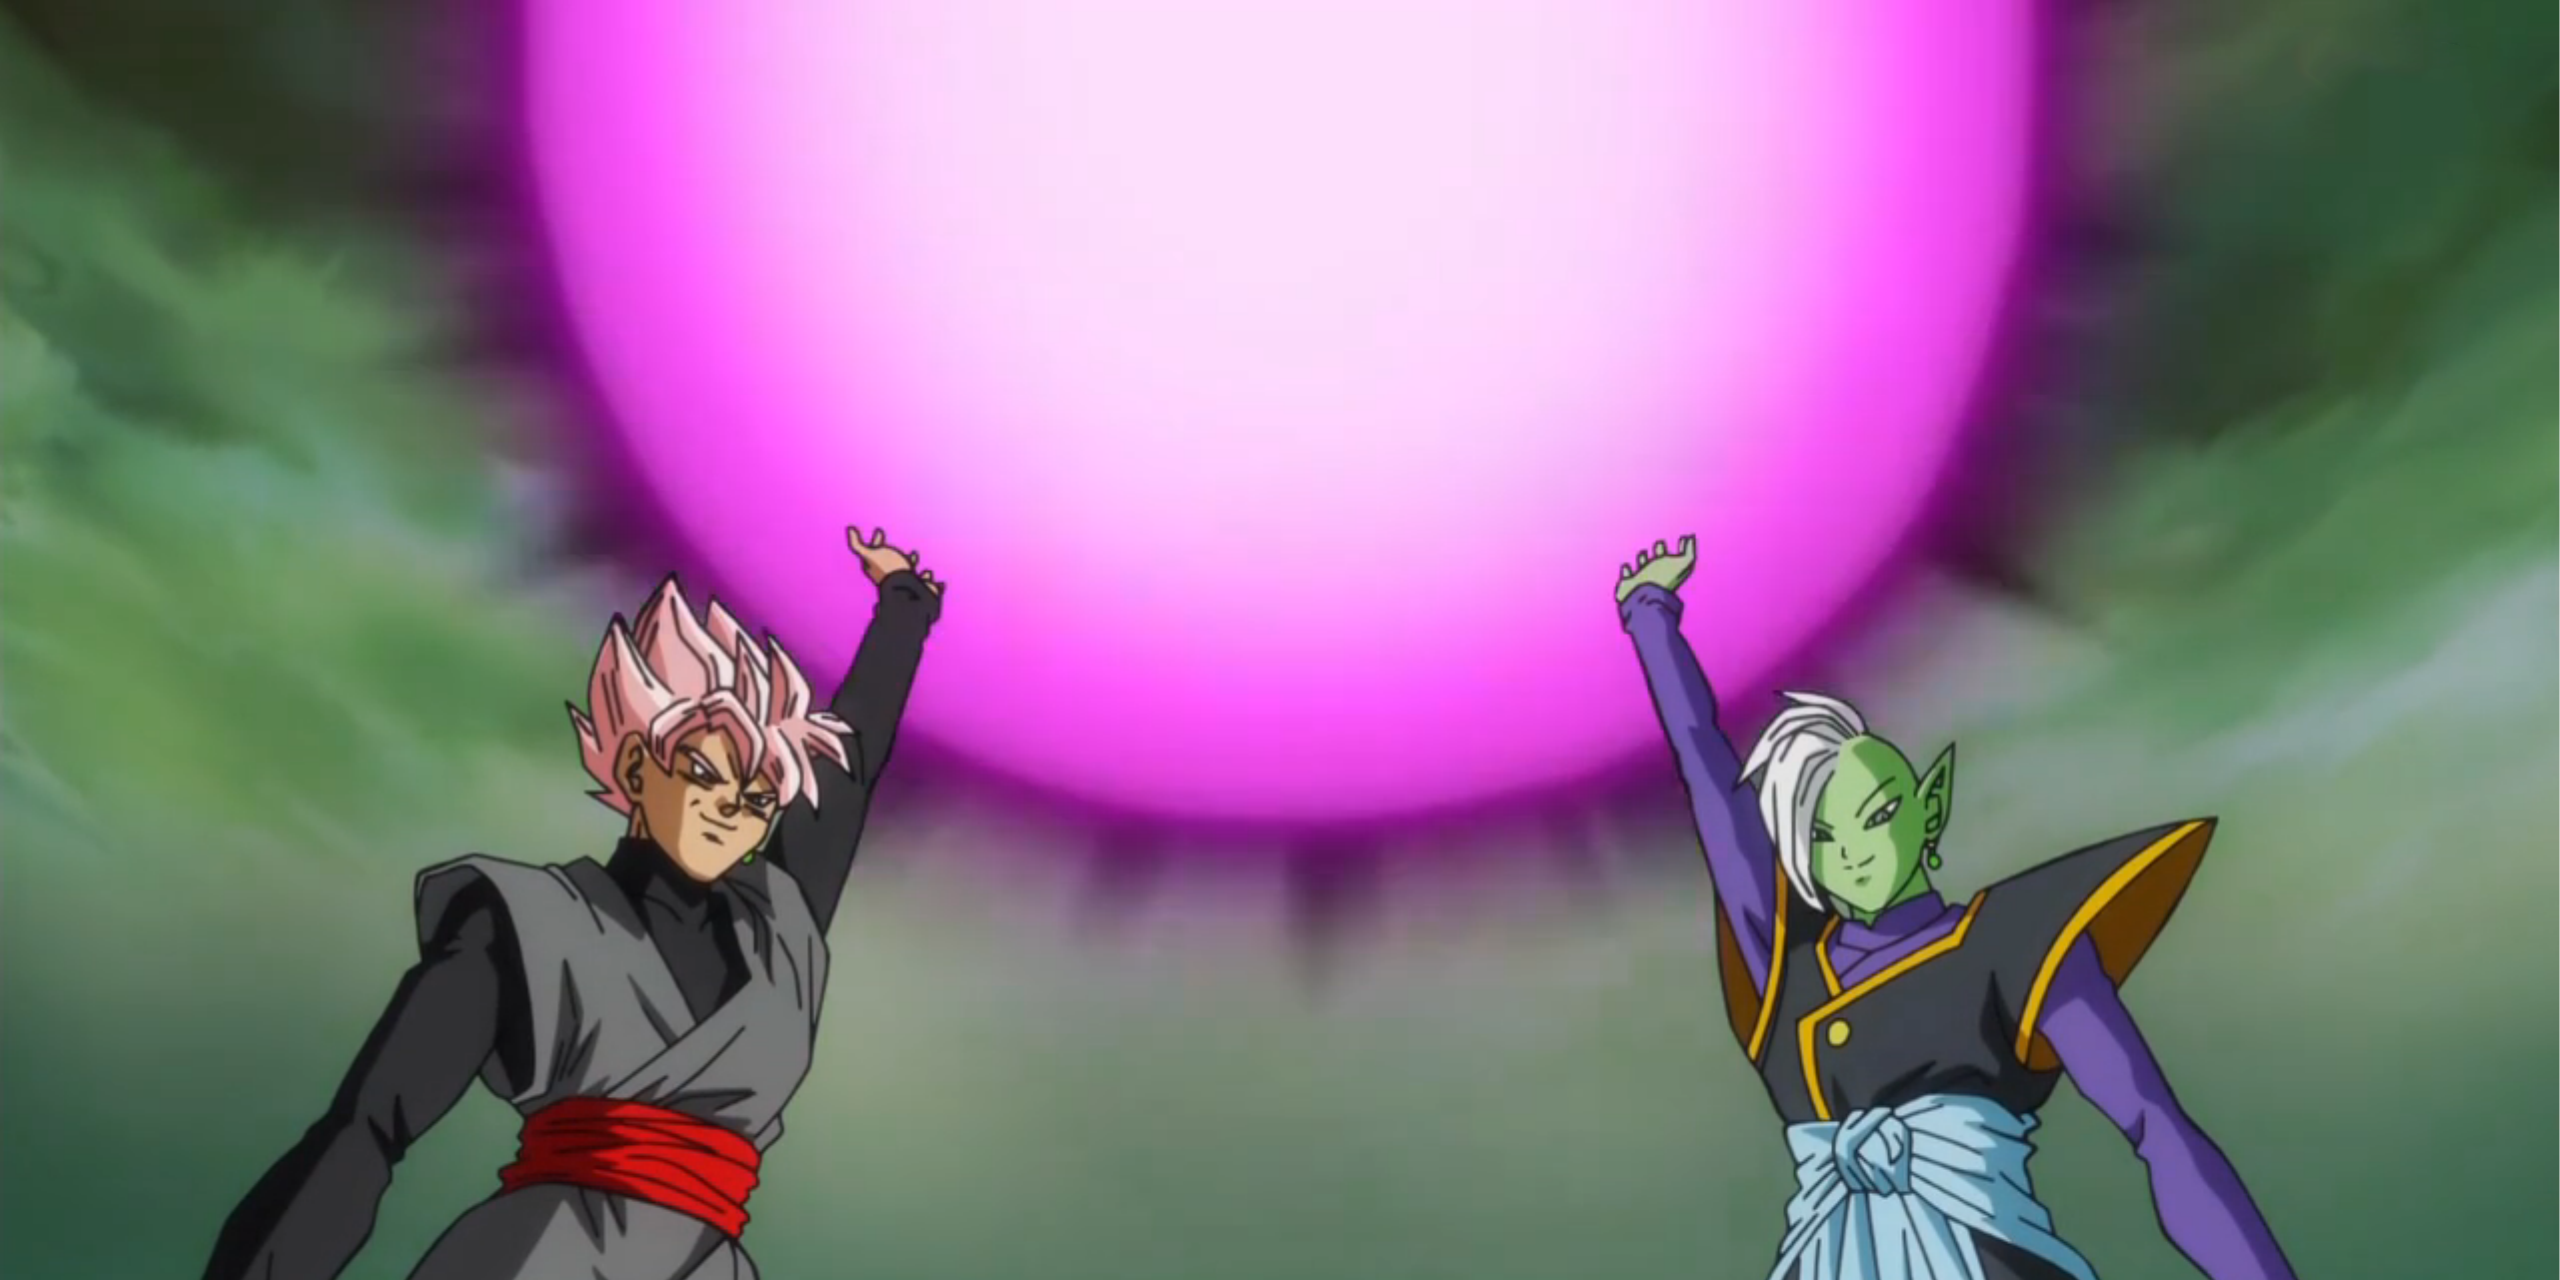 Zamasu and Goku Black prepare the Holy Light Grenade in Dragon Ball Super